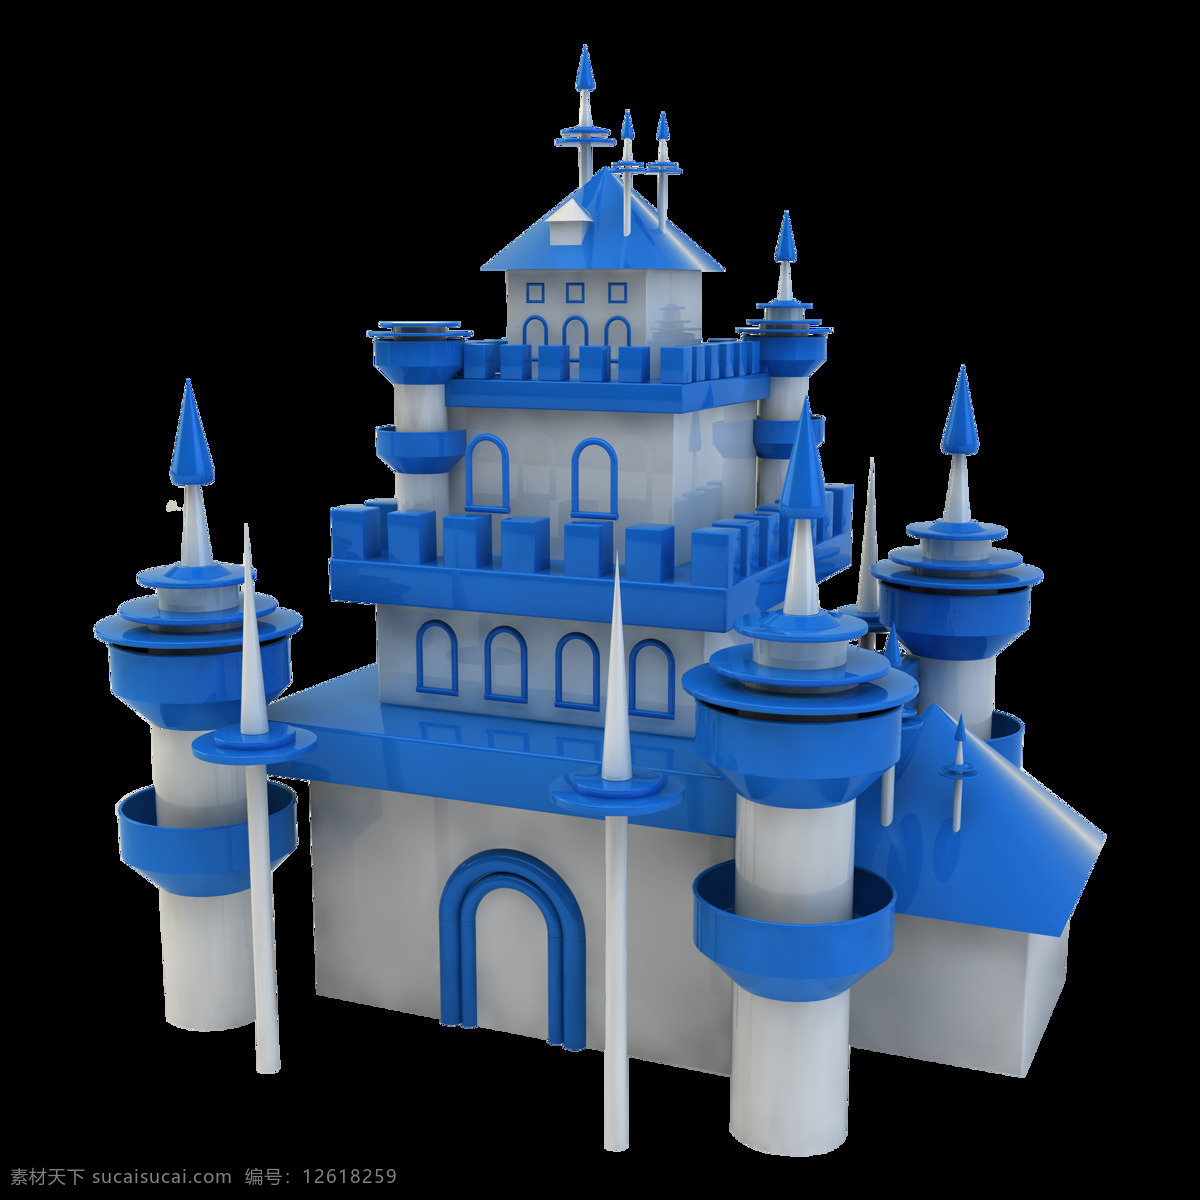 3d 城堡 模型 商用 元素 3d城堡 梦幻 城堡模型 商用元素